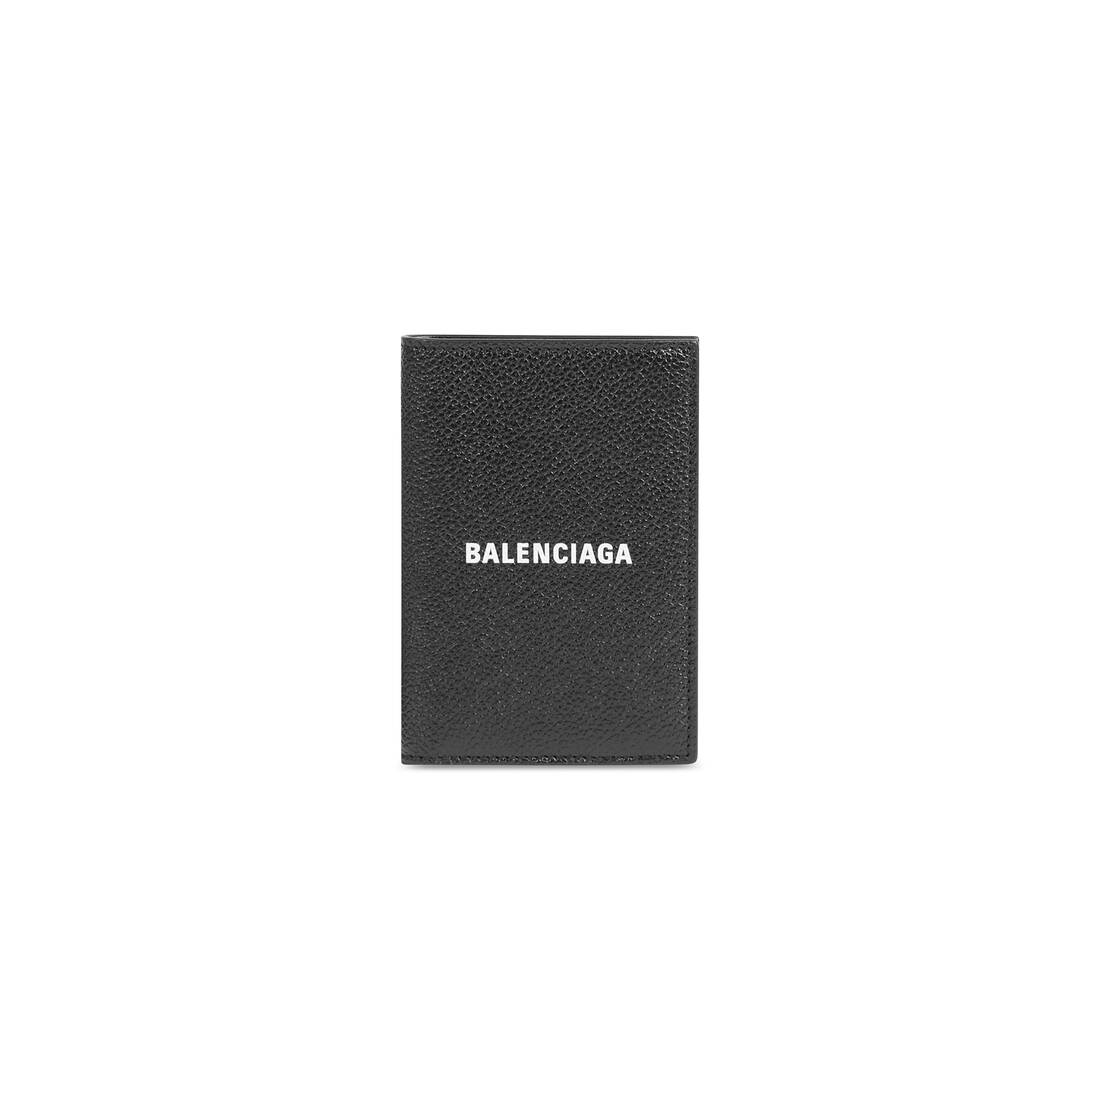 Balenciaga Neo Classic Card Holder in Black for Men